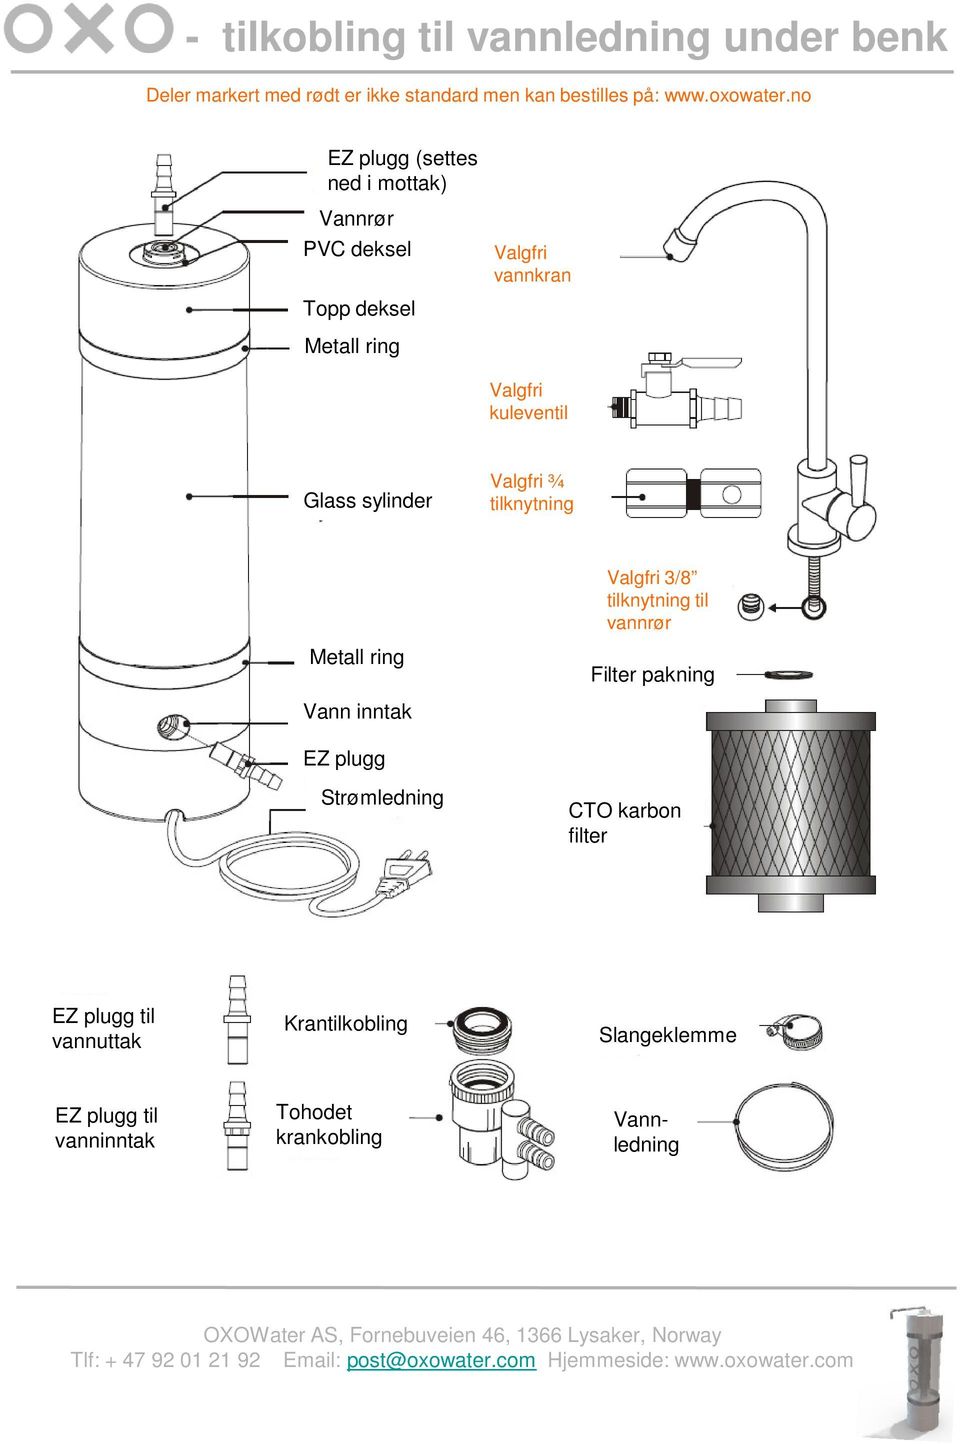 sylinder Valgfri ¾ tilknytning Valgfri 3/8 tilknytning til vannrør Metall ring Filter pakning Vann inntak EZ plugg